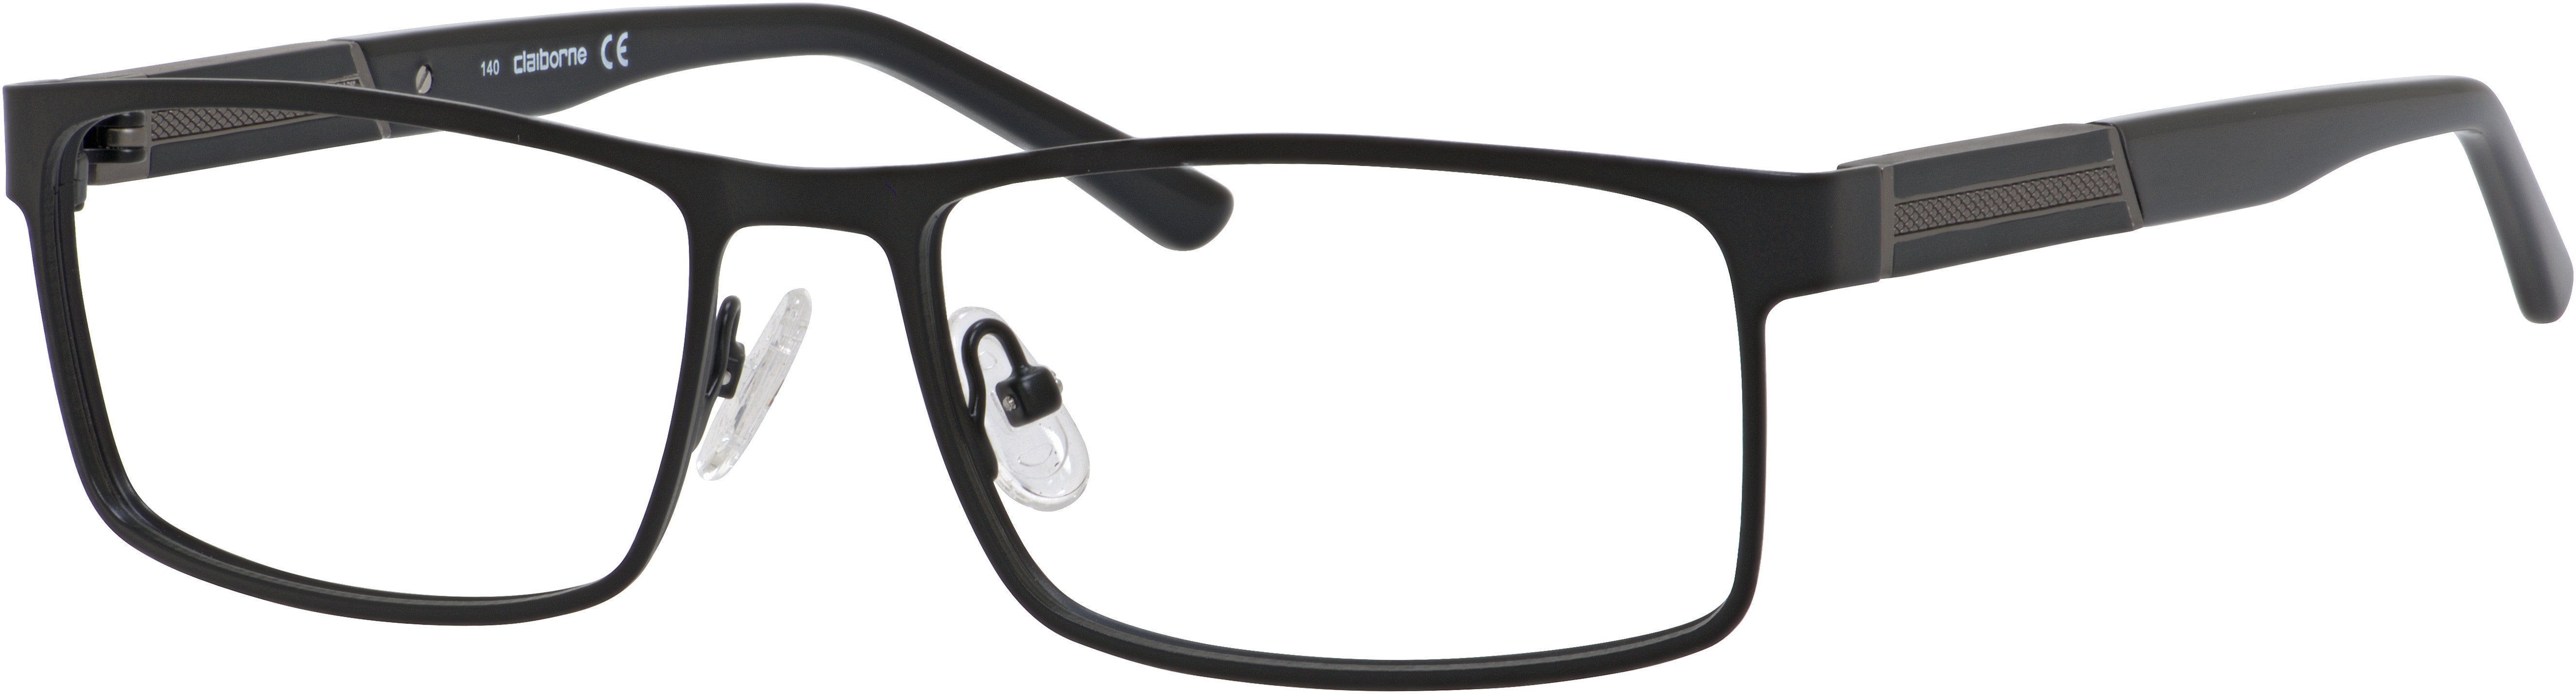  Claiborne 237XL Rectangular Eyeglasses 0807-0807  Black (00 Demo Lens)